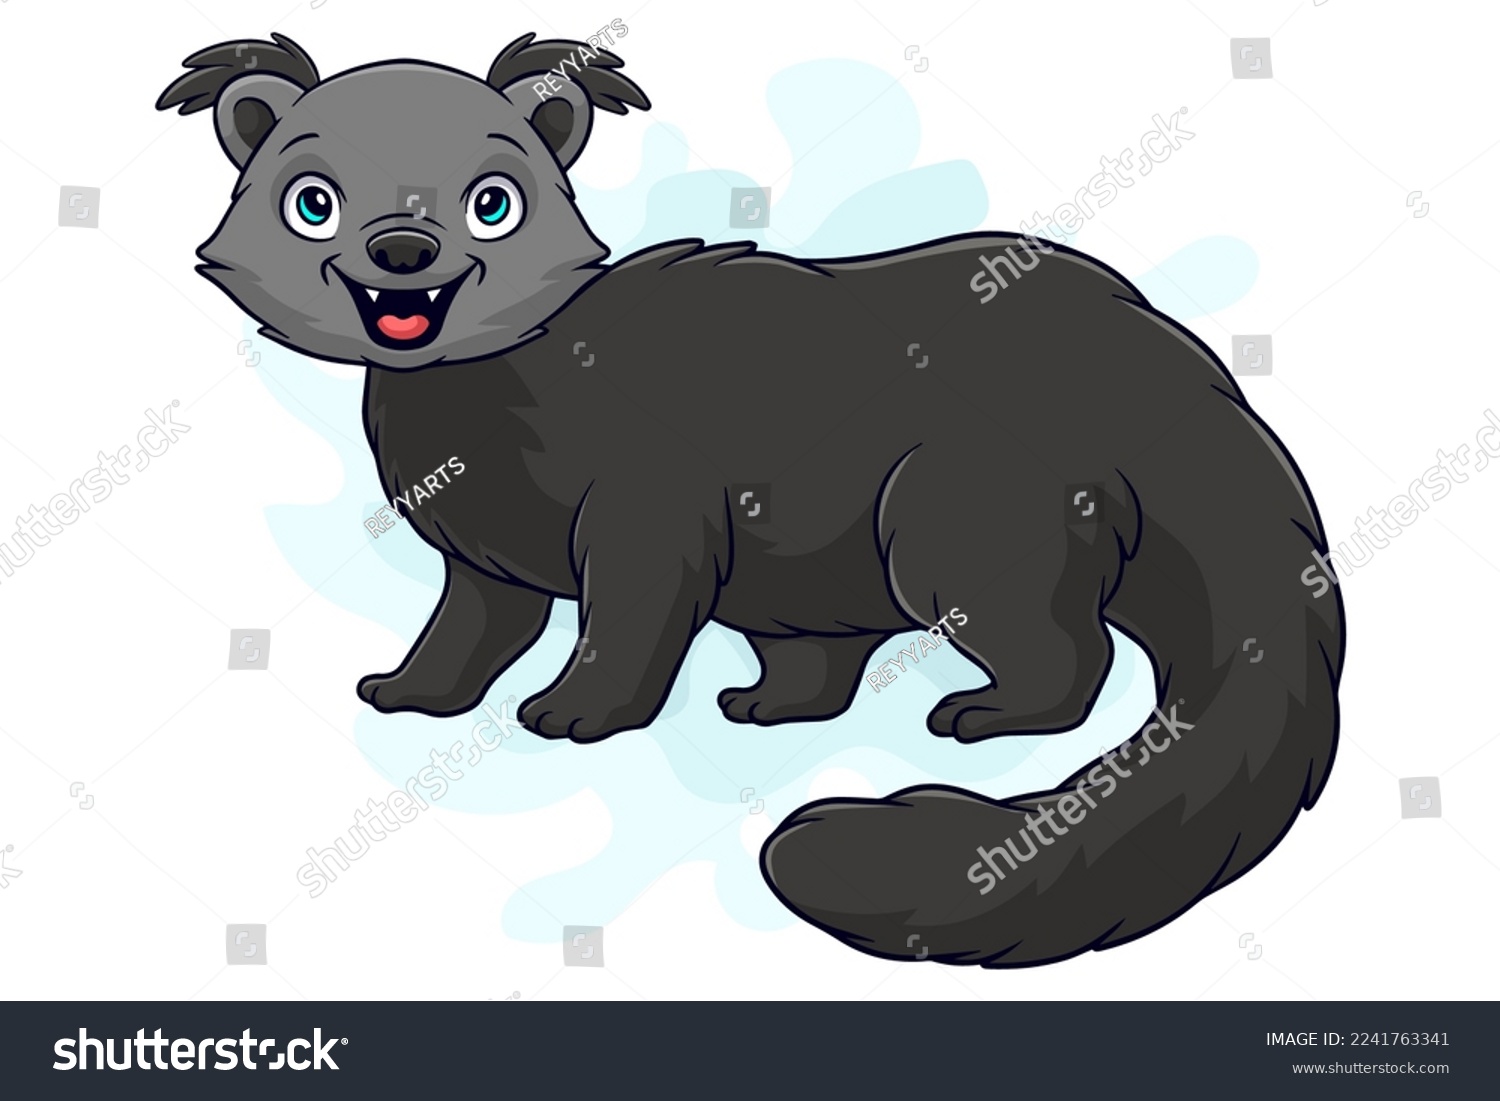 SVG of Cartoon funny bearcat cartoon isolated on white background svg